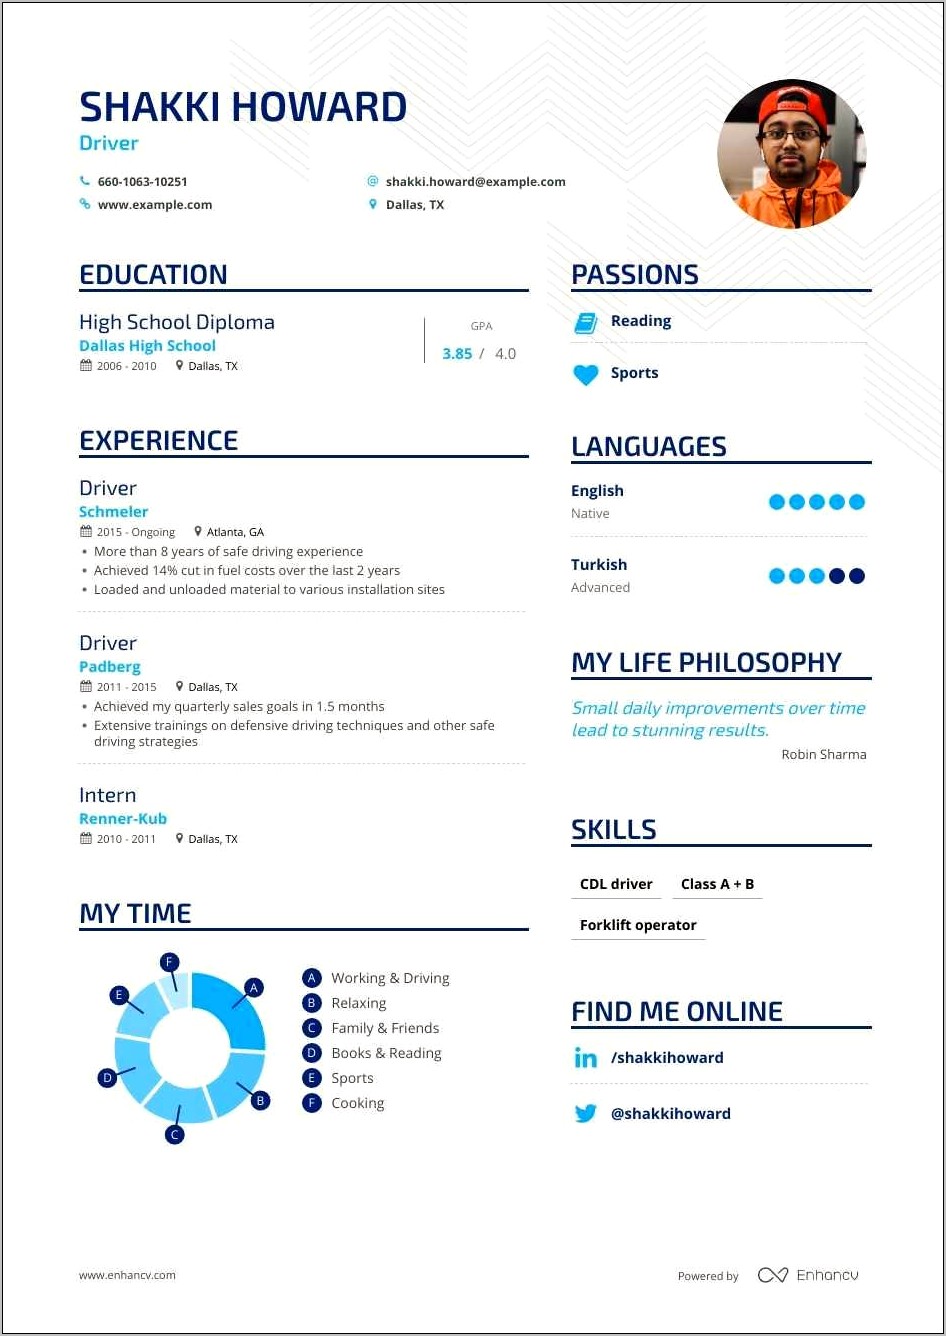 Ambulance Driver Job Description For Resume